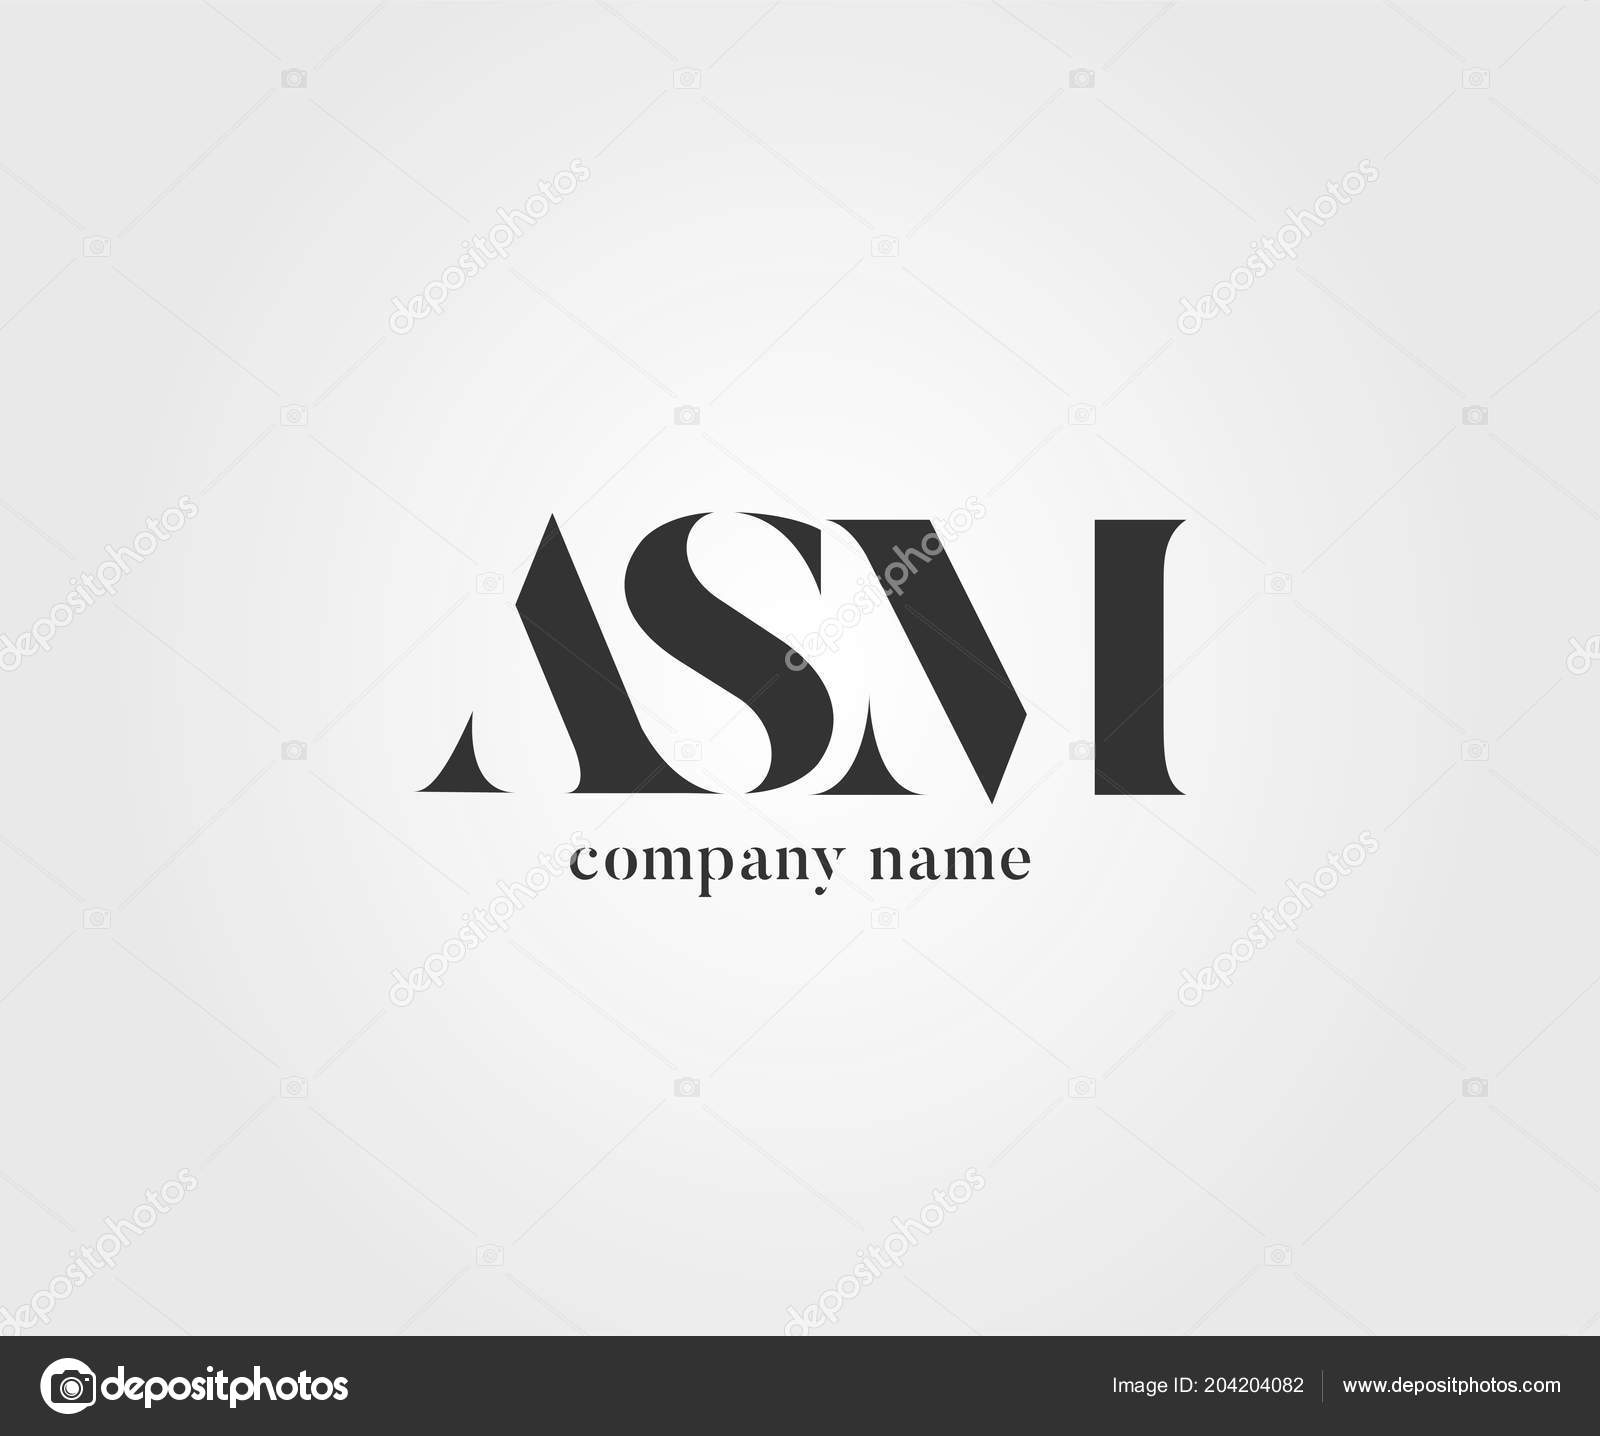 129 Asm Logo Design Images, Stock Photos & Vectors | Shutterstock